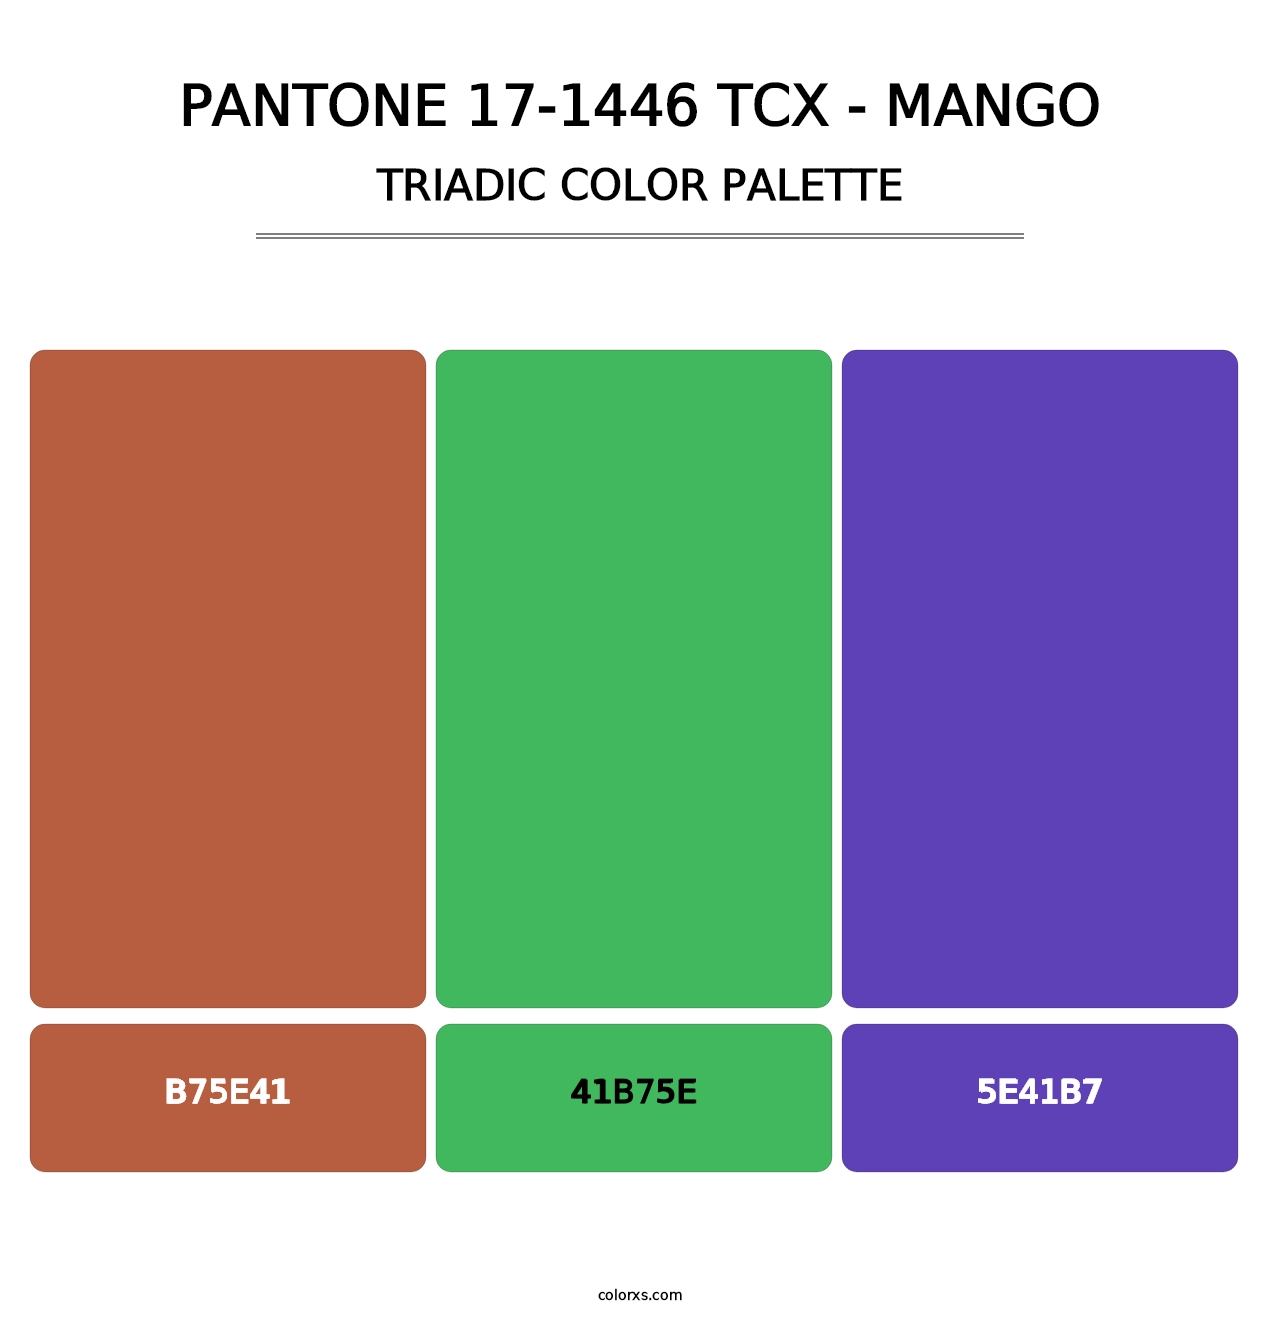 PANTONE 17-1446 TCX - Mango - Triadic Color Palette